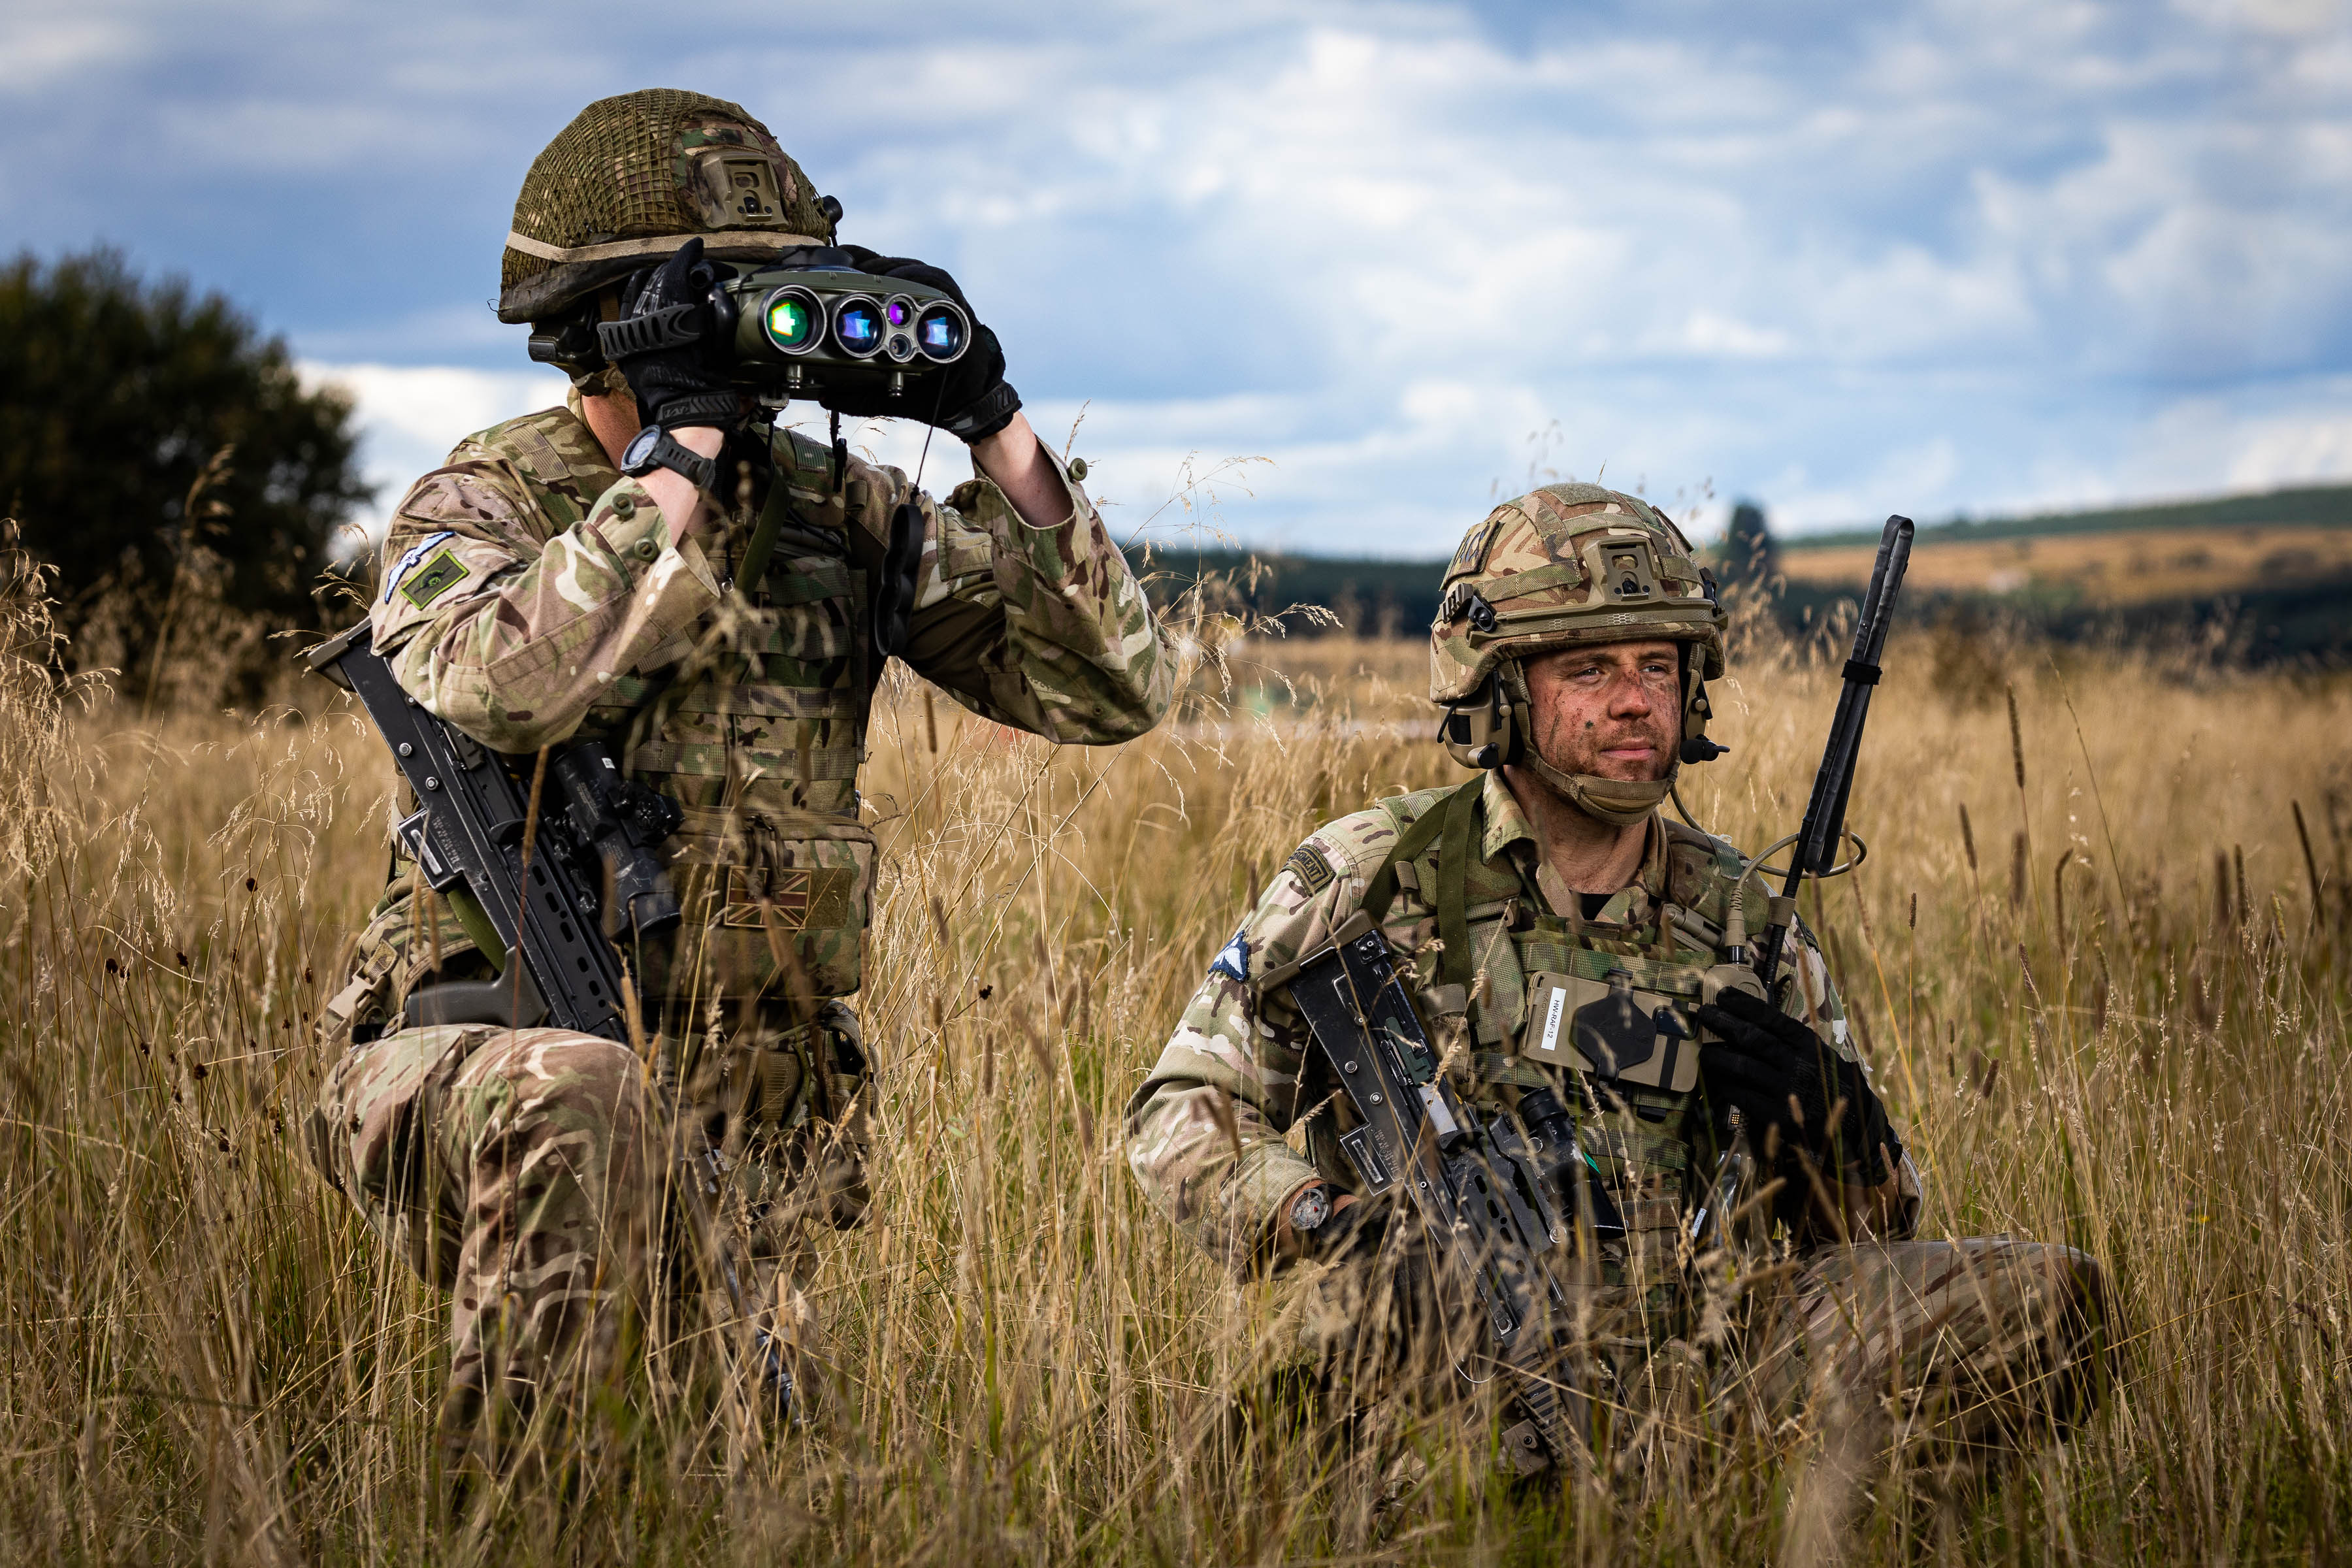 Image shows RAF personnel kneeling in field with binoculars.